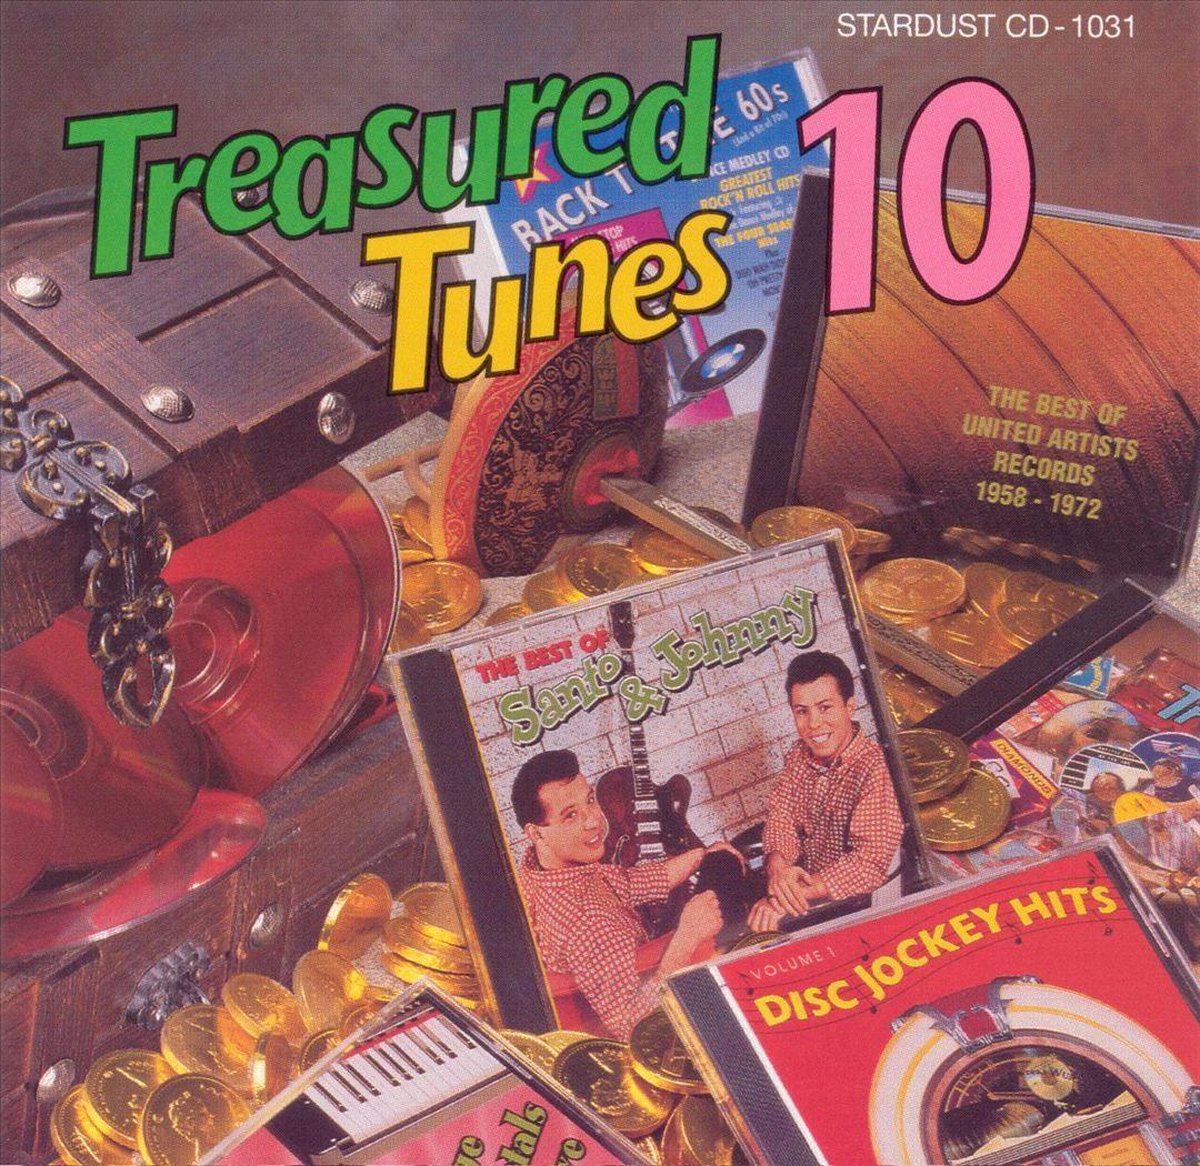 Treasured Tunes 10 - various artists